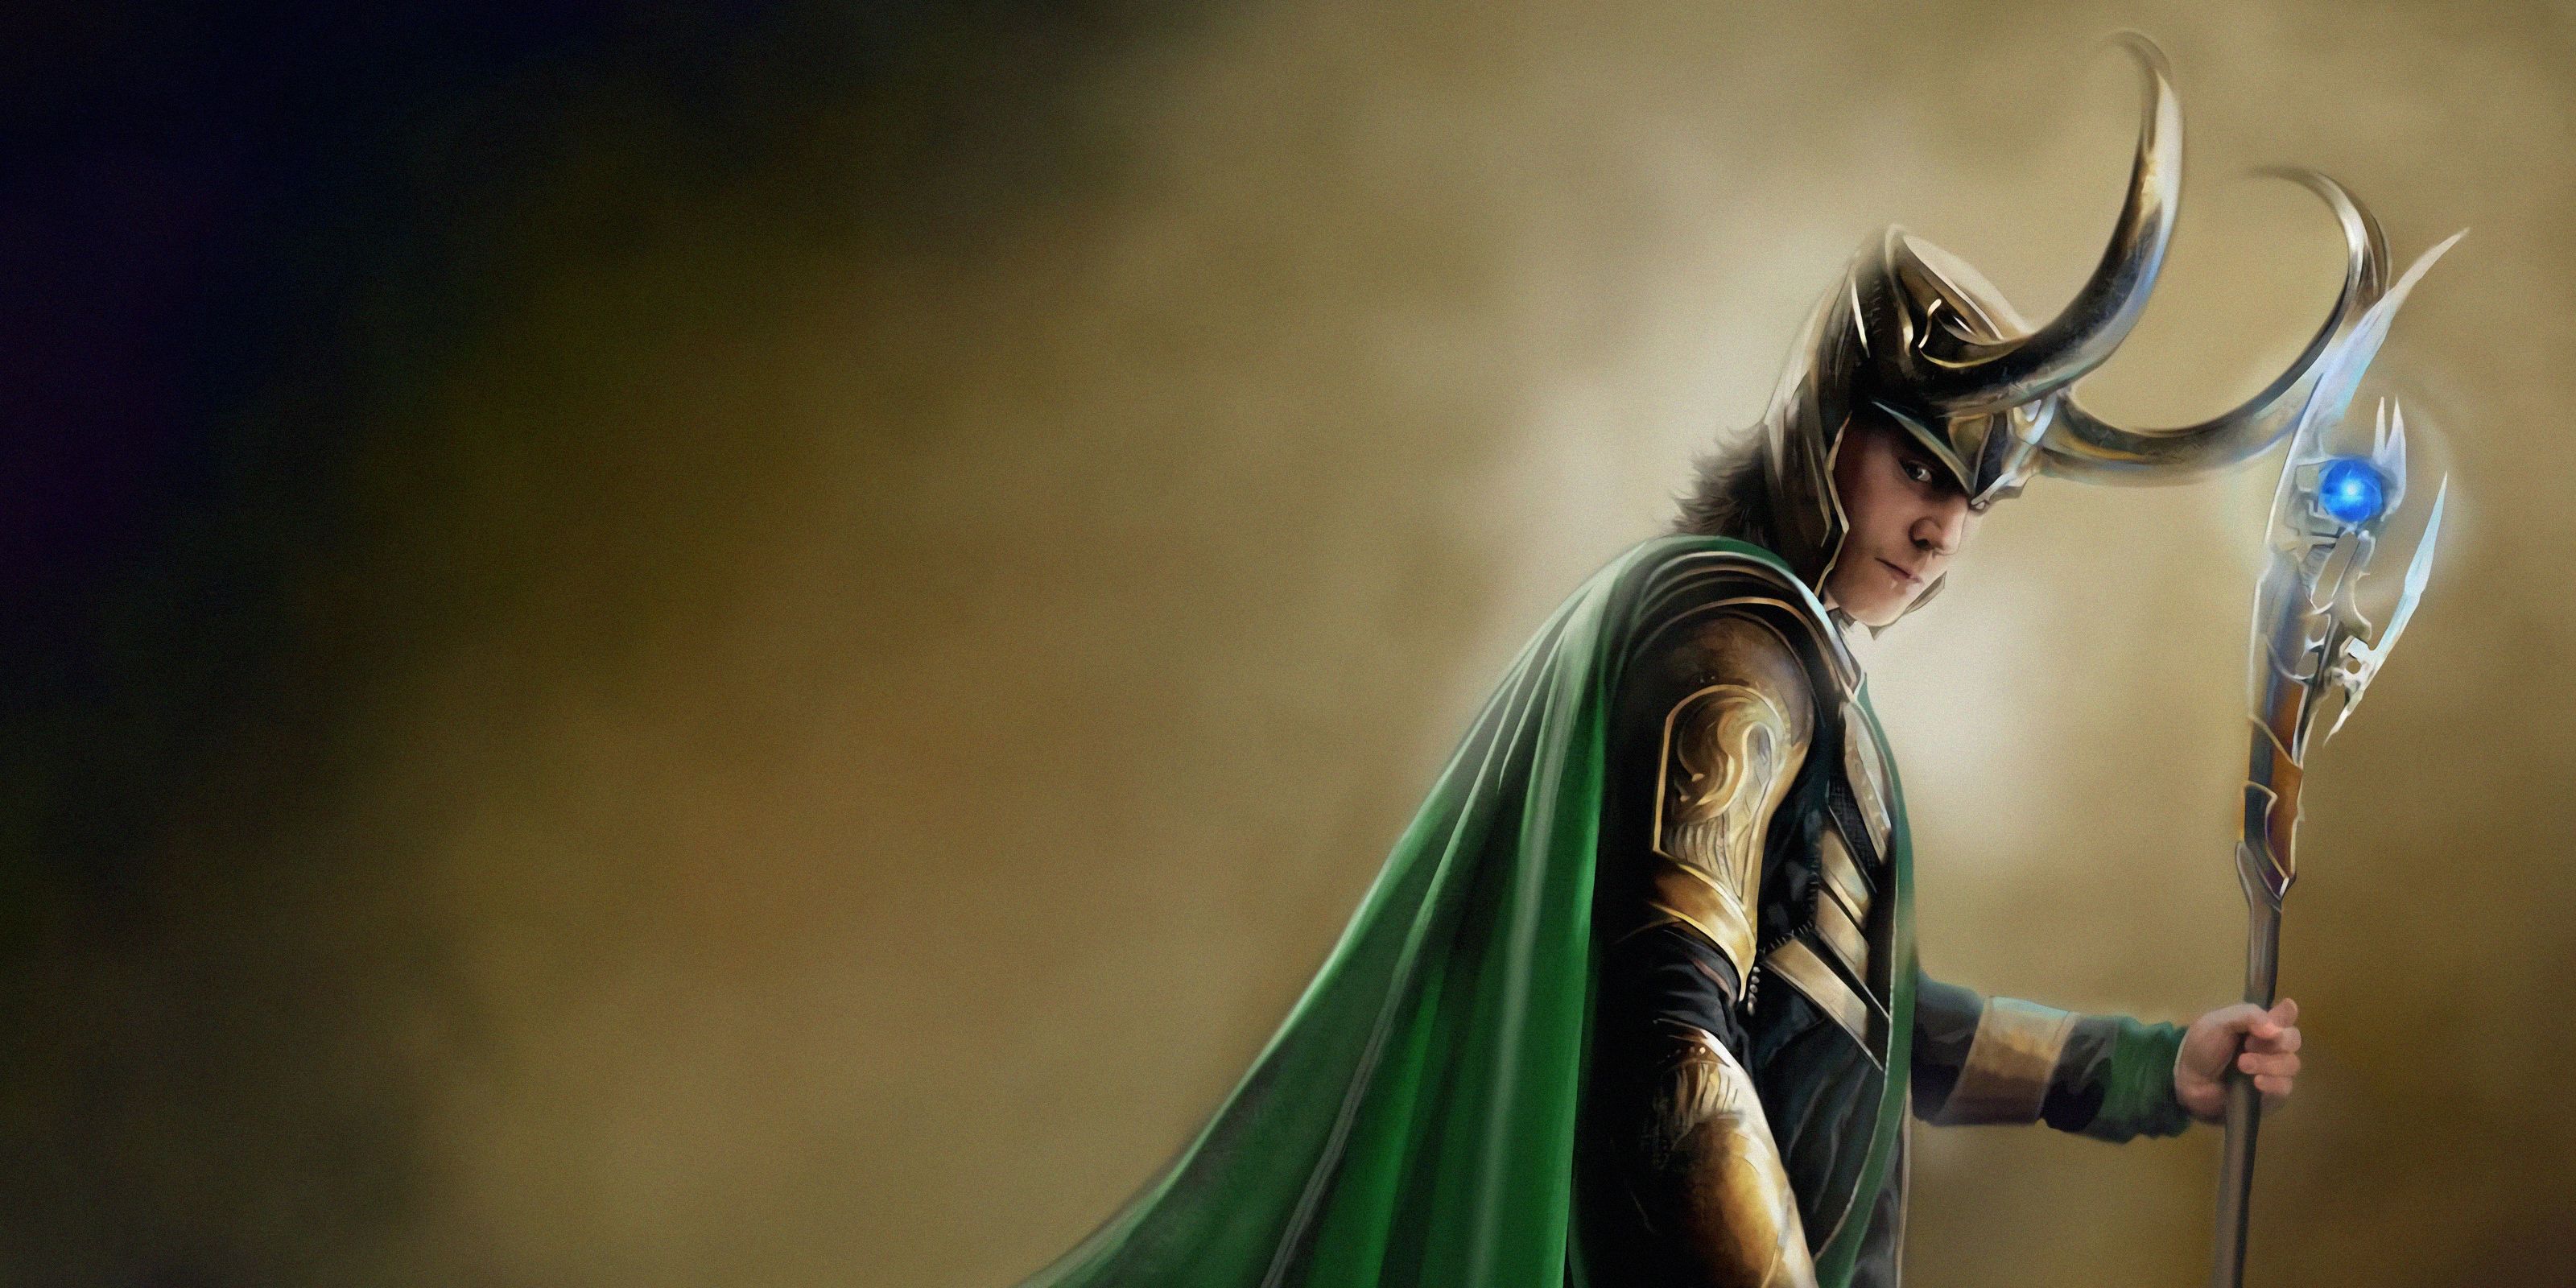 MCU Loki in Horned Costume with Sceptre